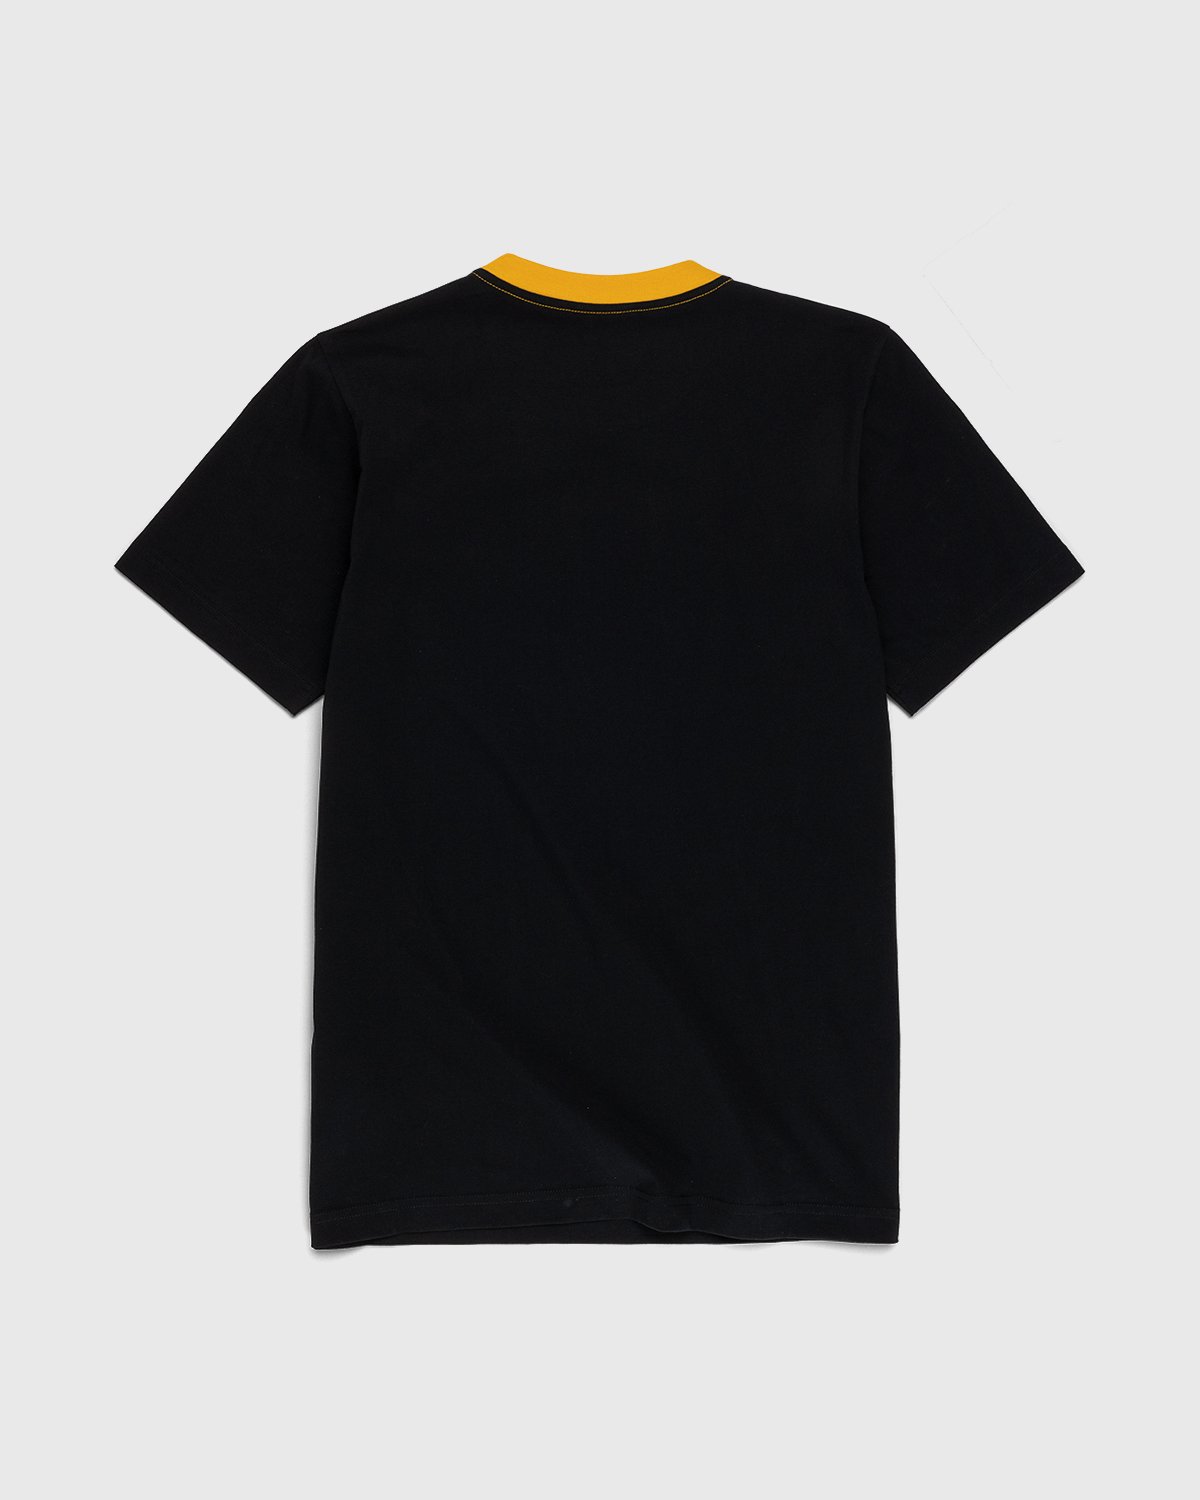 Marni - Stripe Logo Bio Jersey T-Shirt Black/Gold - Clothing - Yellow - Image 2